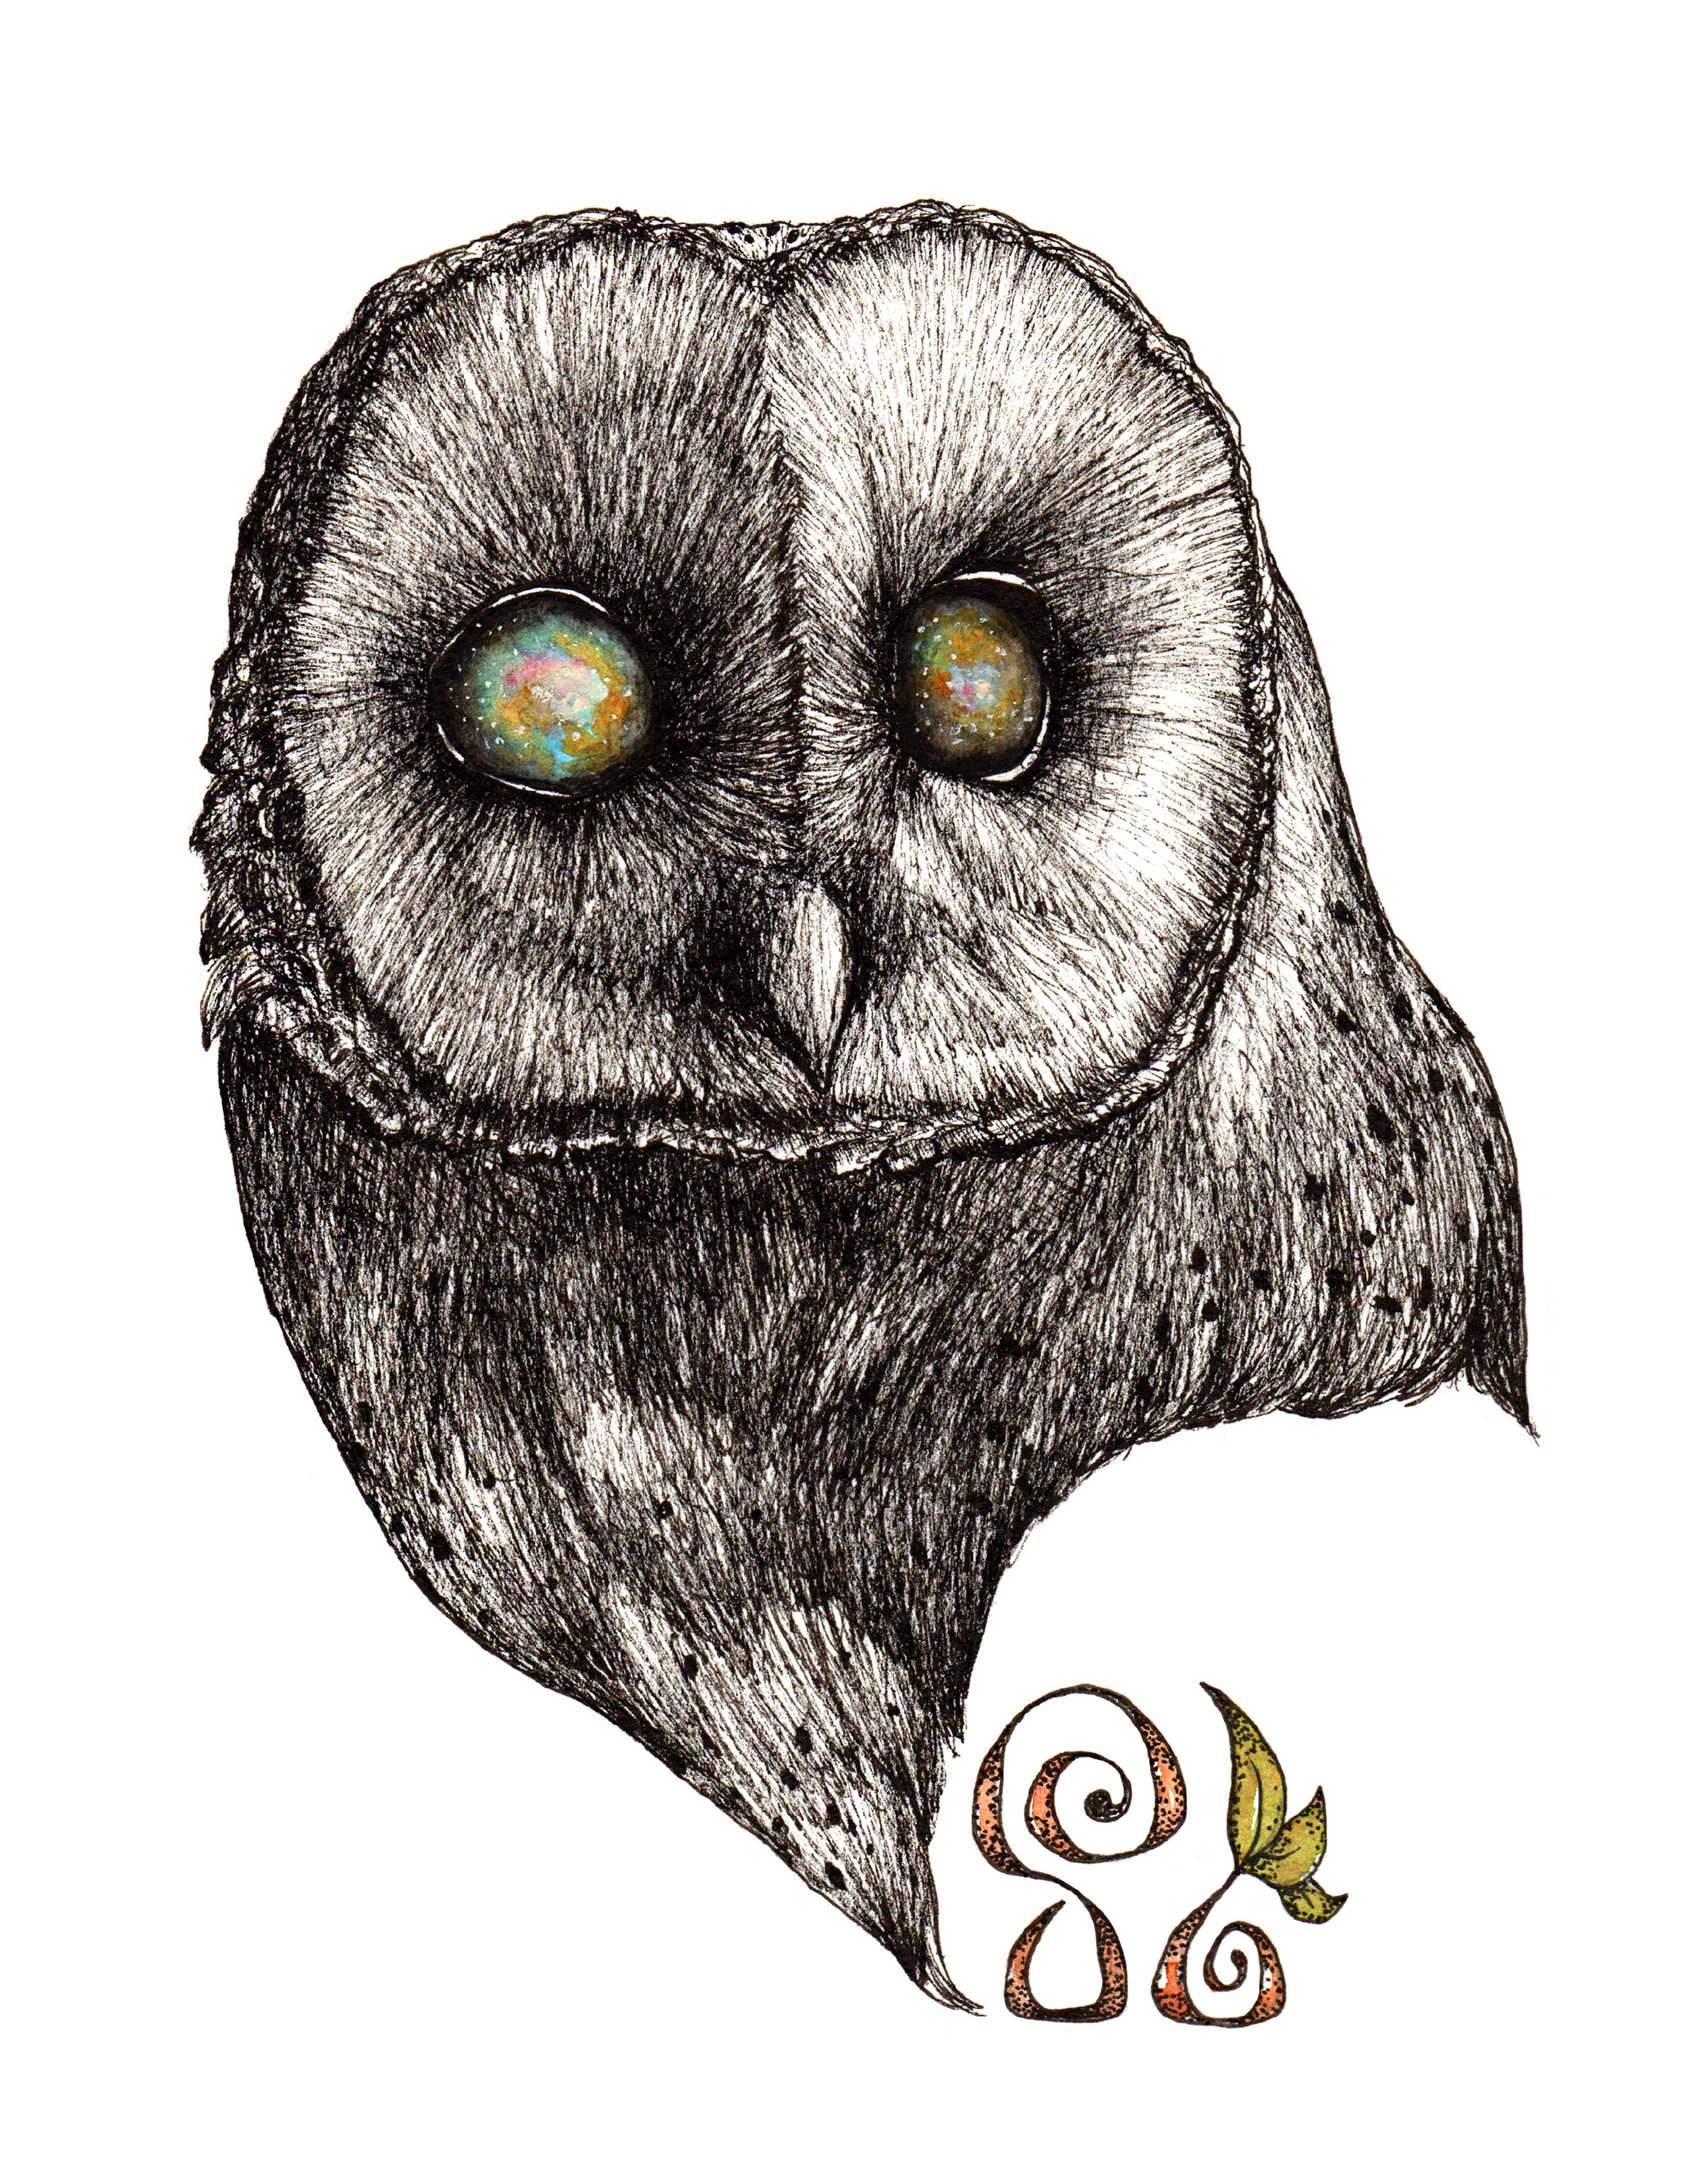 Owl PRINT.jpg